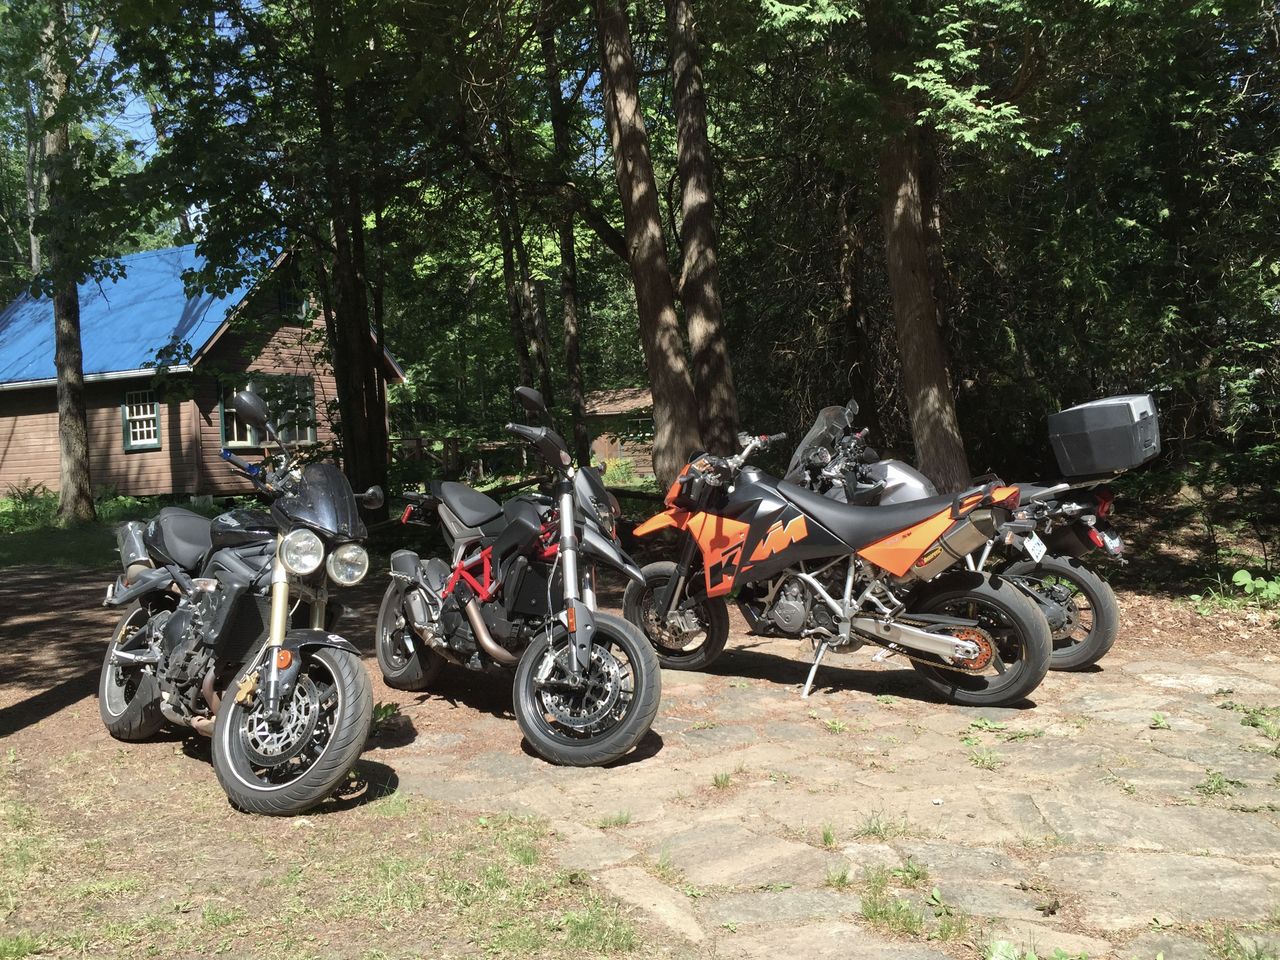 The perfect parking lot: Ducati Hypermotard, Triumph Street Triple, KTM 950 SM and a Triumph Explorer 1200